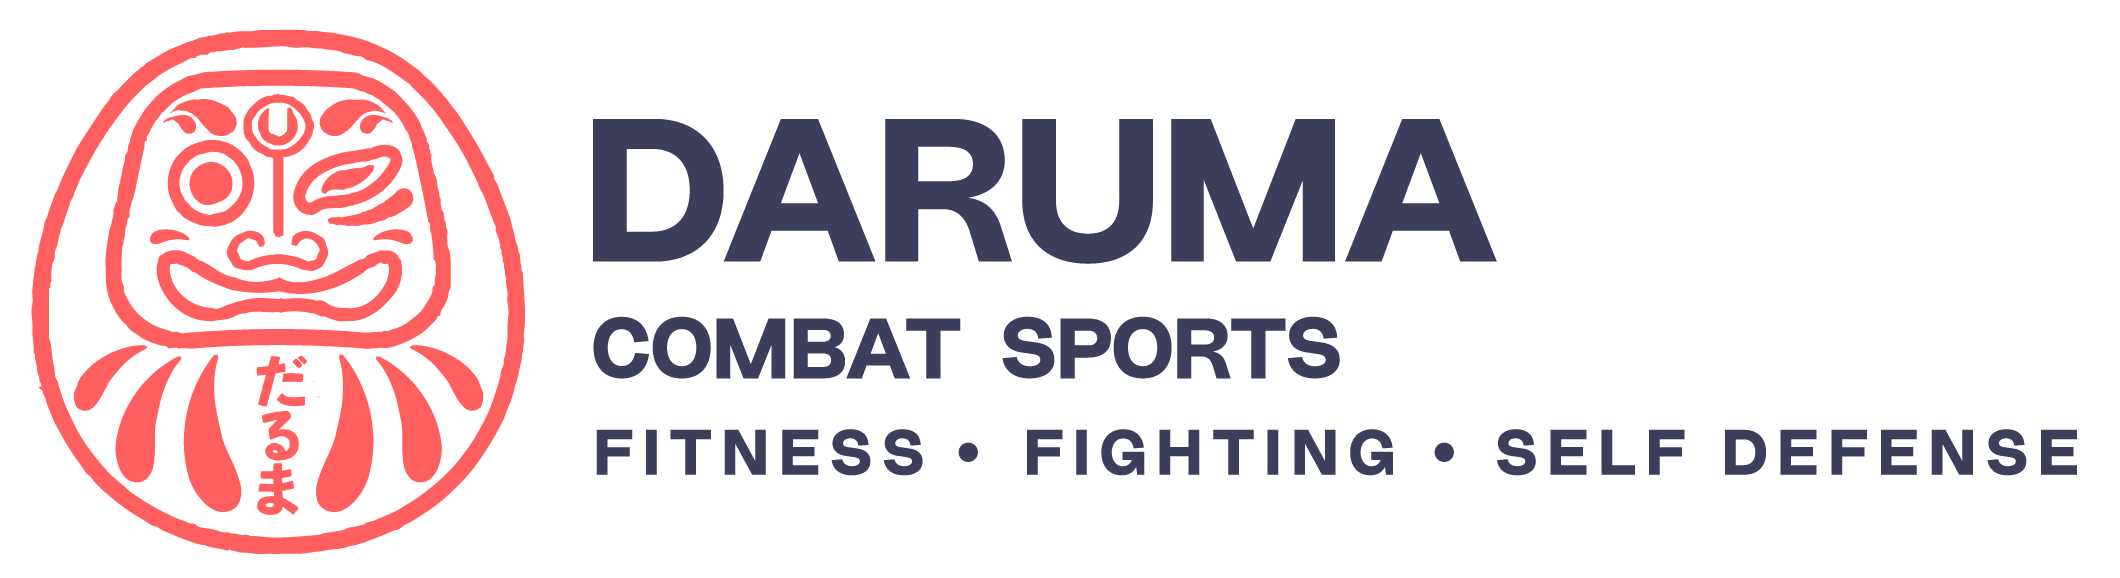 Daruma Combat Sports